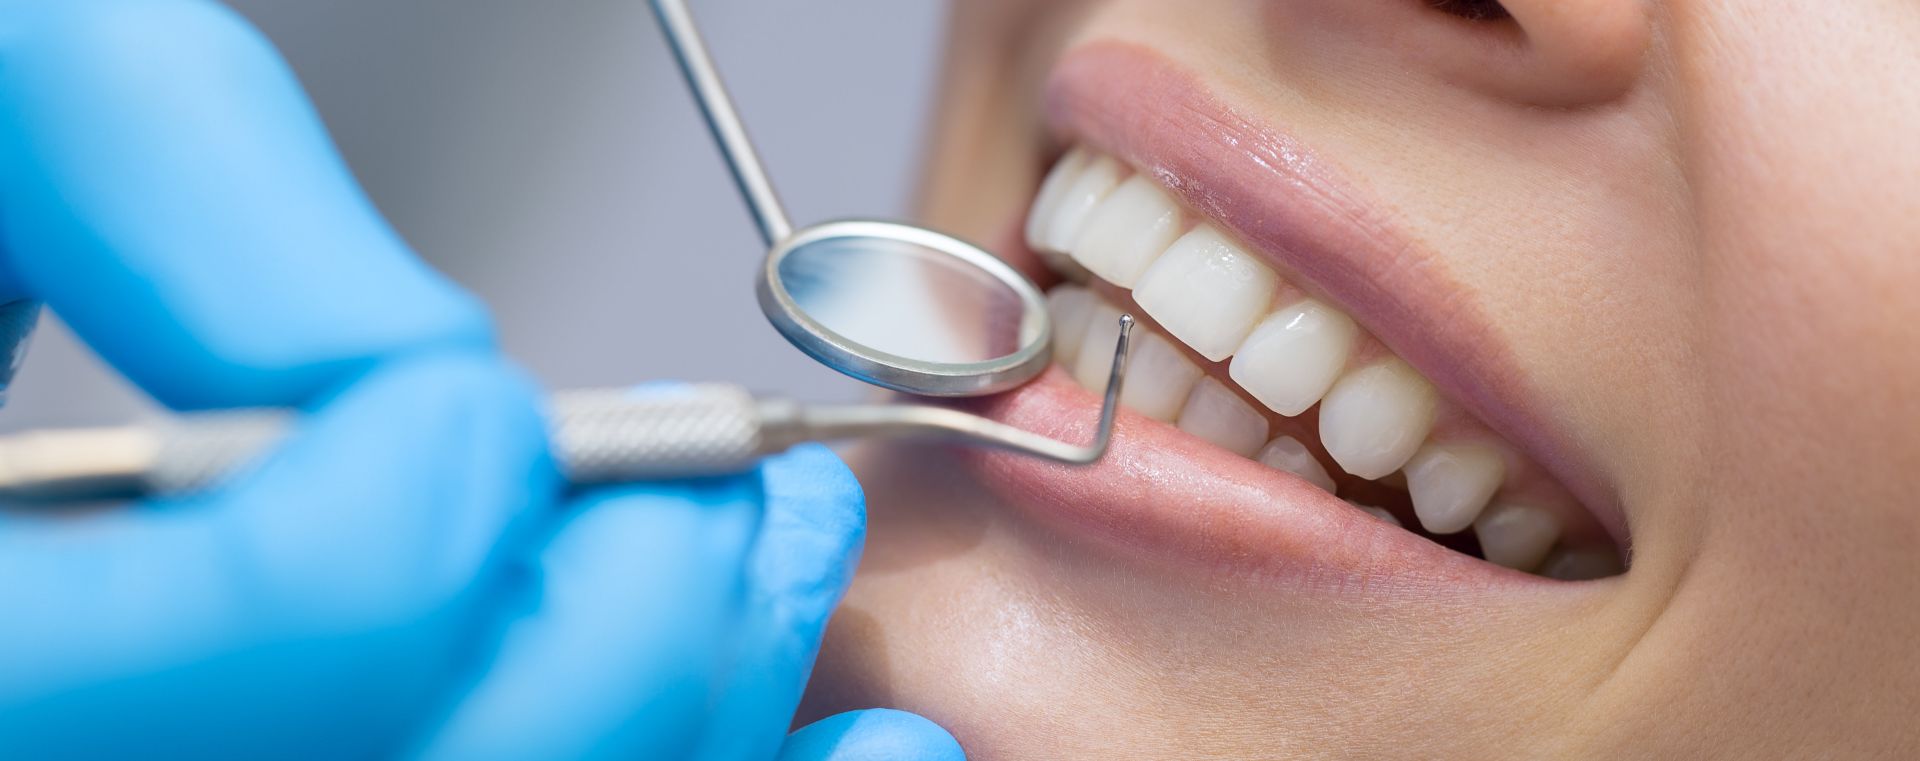 Clinica Odontoiatrica Mancini - parodontologia